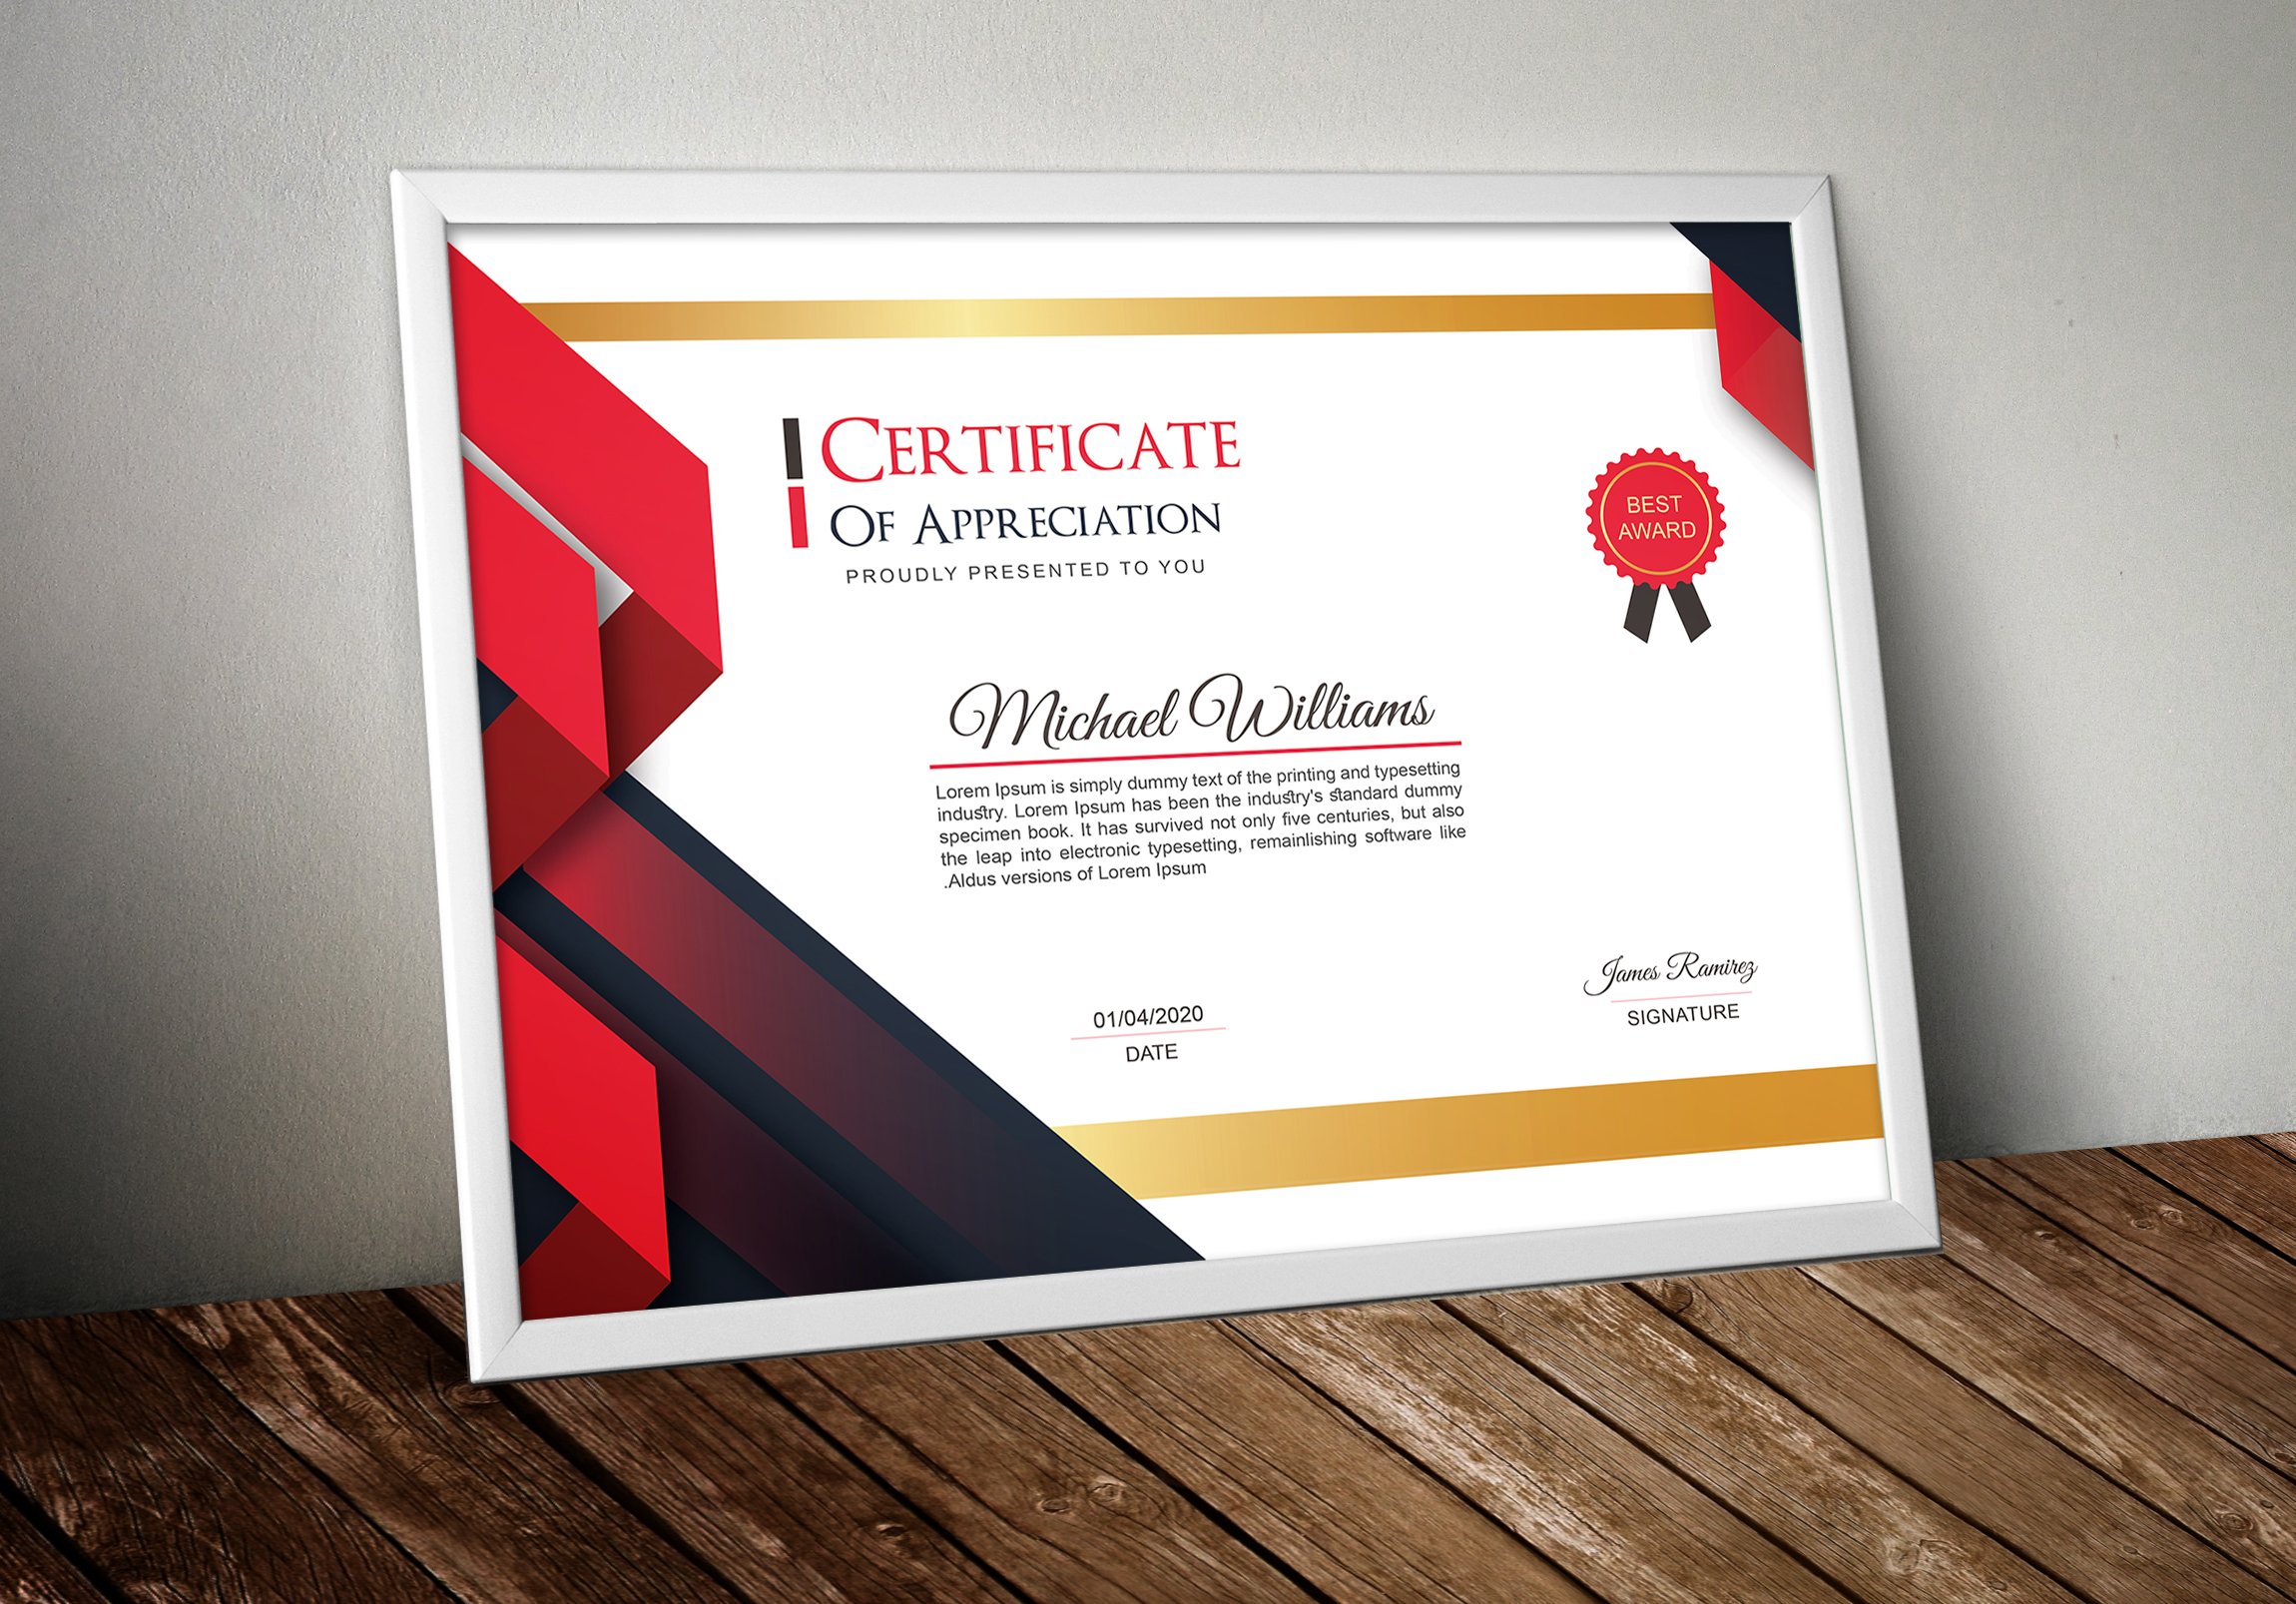 Multipurpose Certificate Template cover image.